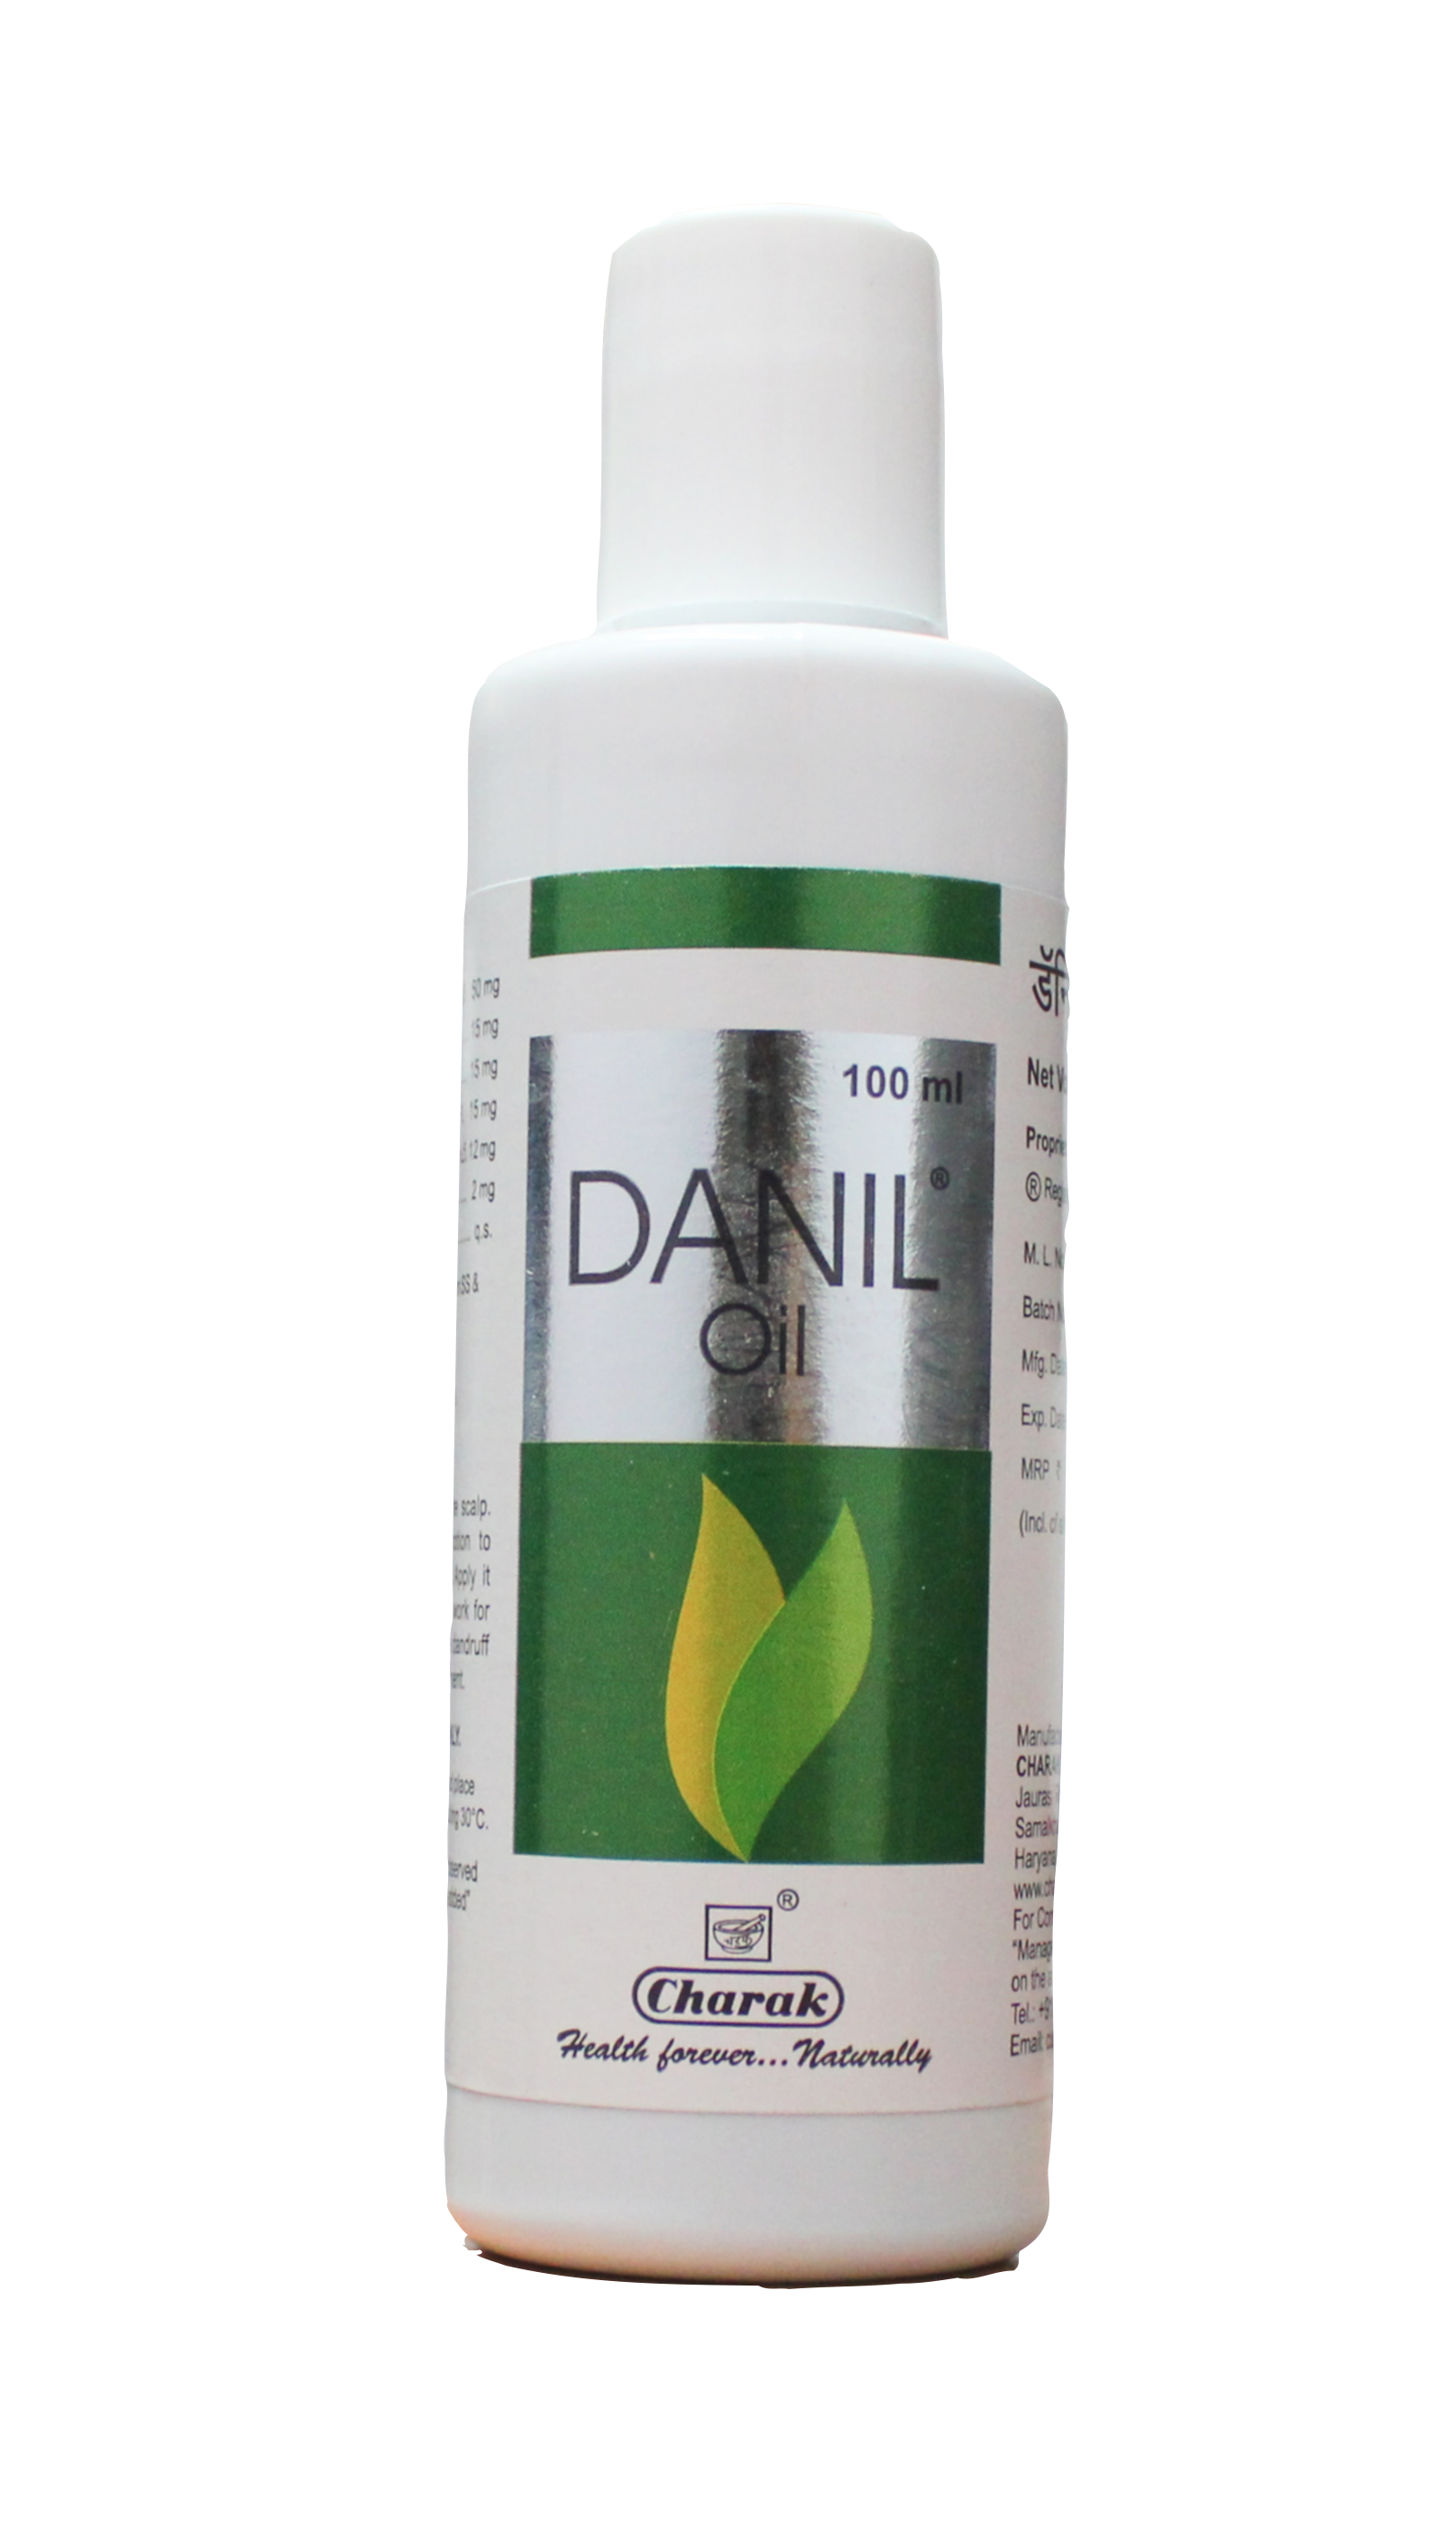 Shop Danil anti dandrull hair oil 100ml at price 220.00 from Charak Online - Ayush Care